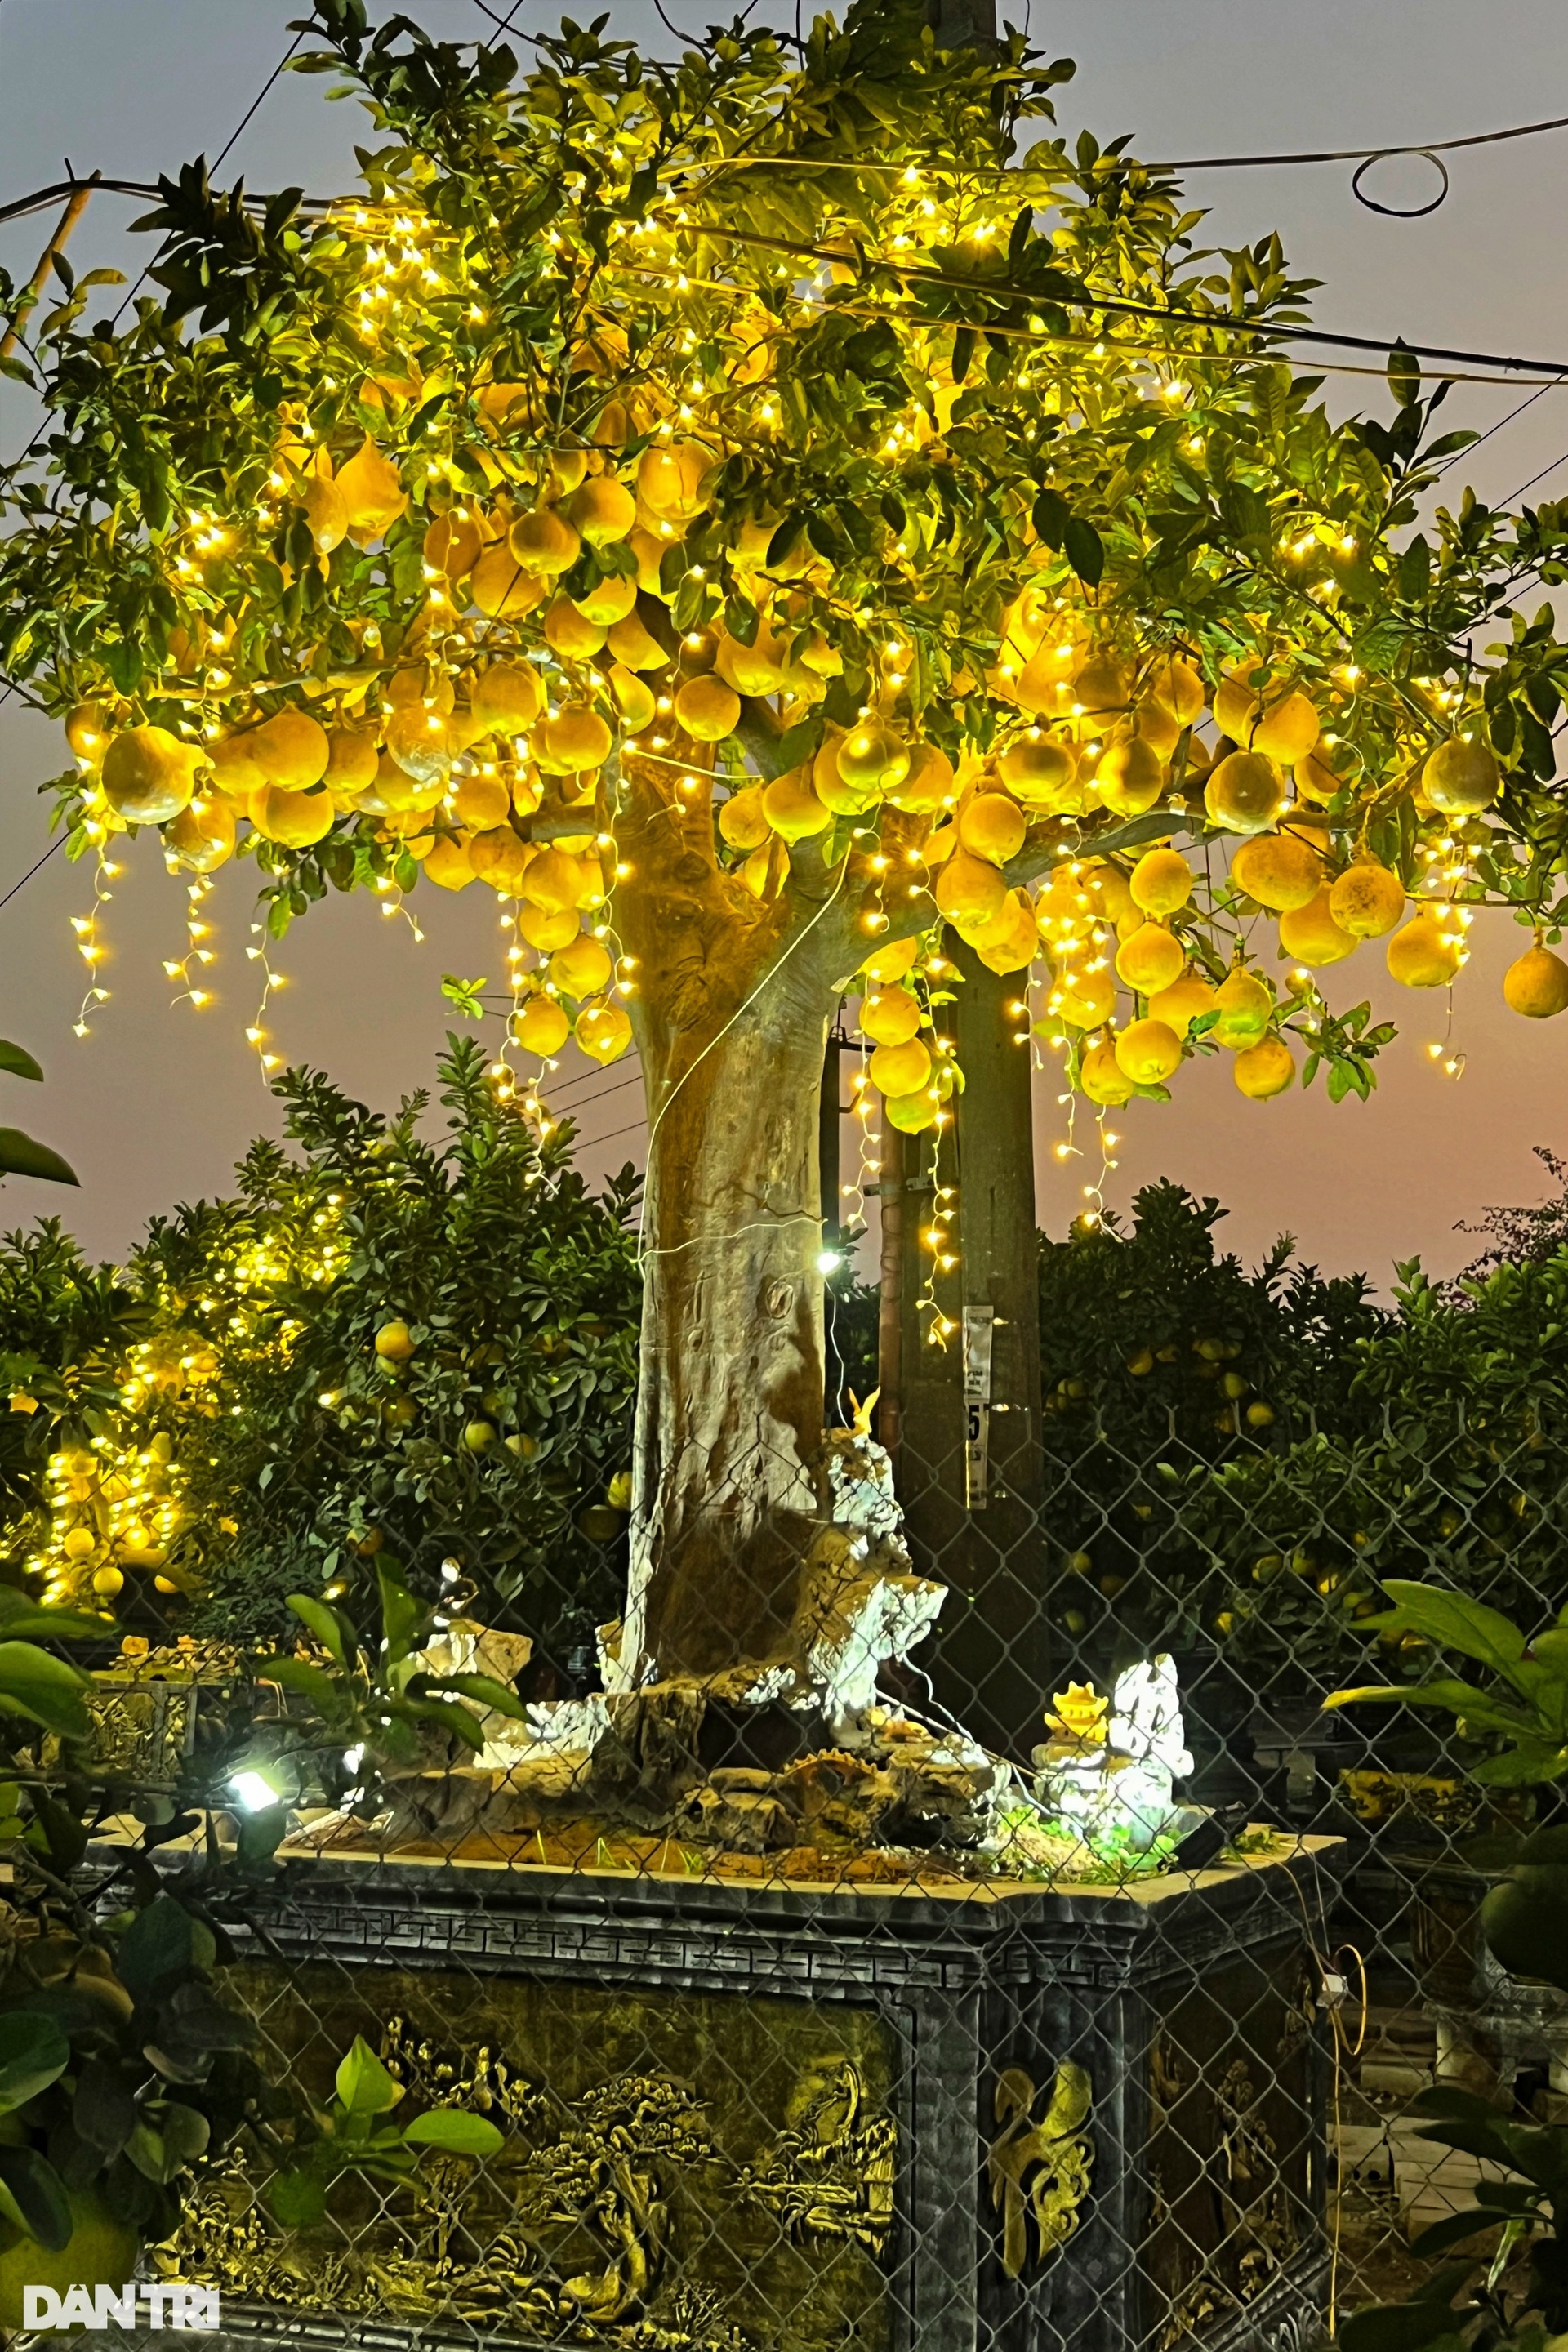 Unique 400-fruit Dien pomelo tree for sale for 200 million dong in Hanoi - 7